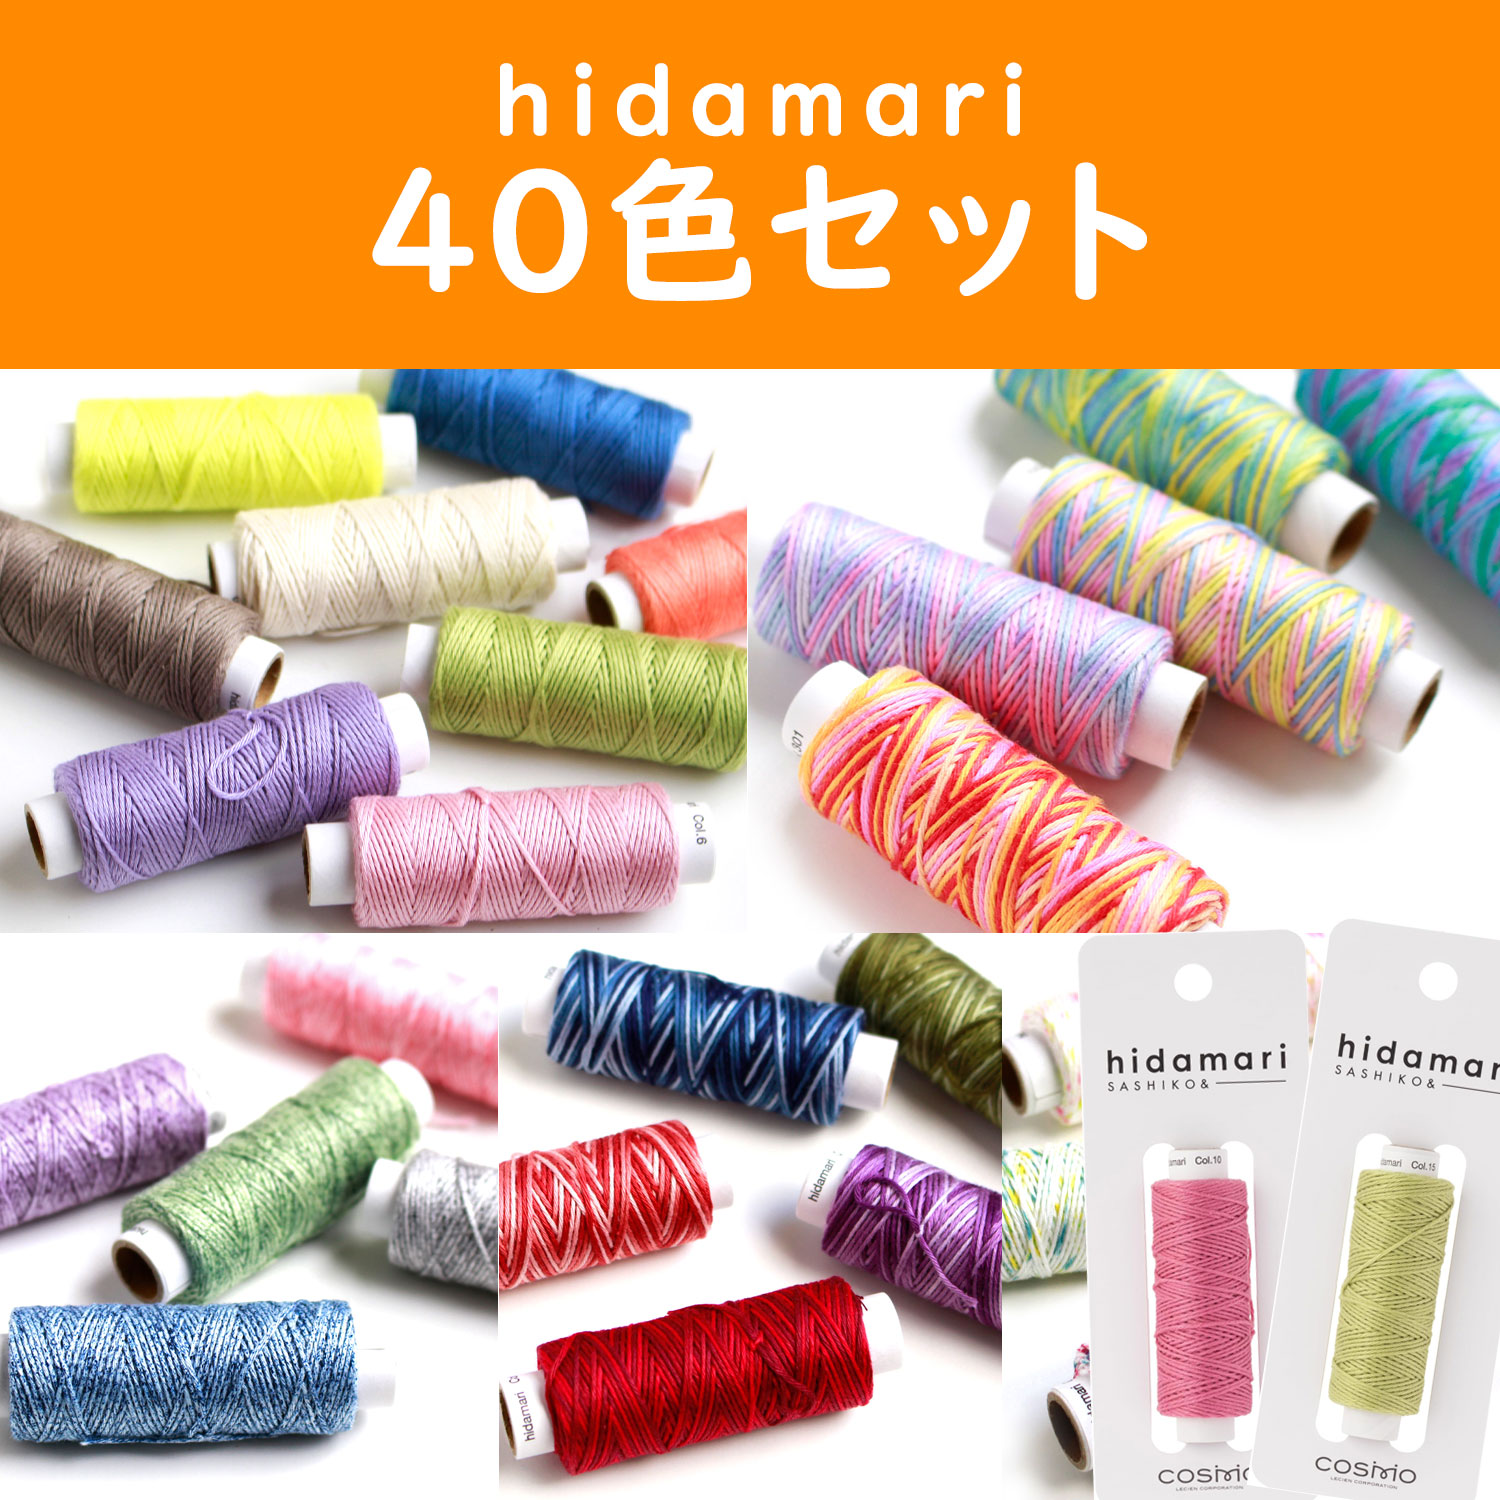 CS12230-40SET Cosmo Sashiko Thread All 40 colors set - hidamari - (set)